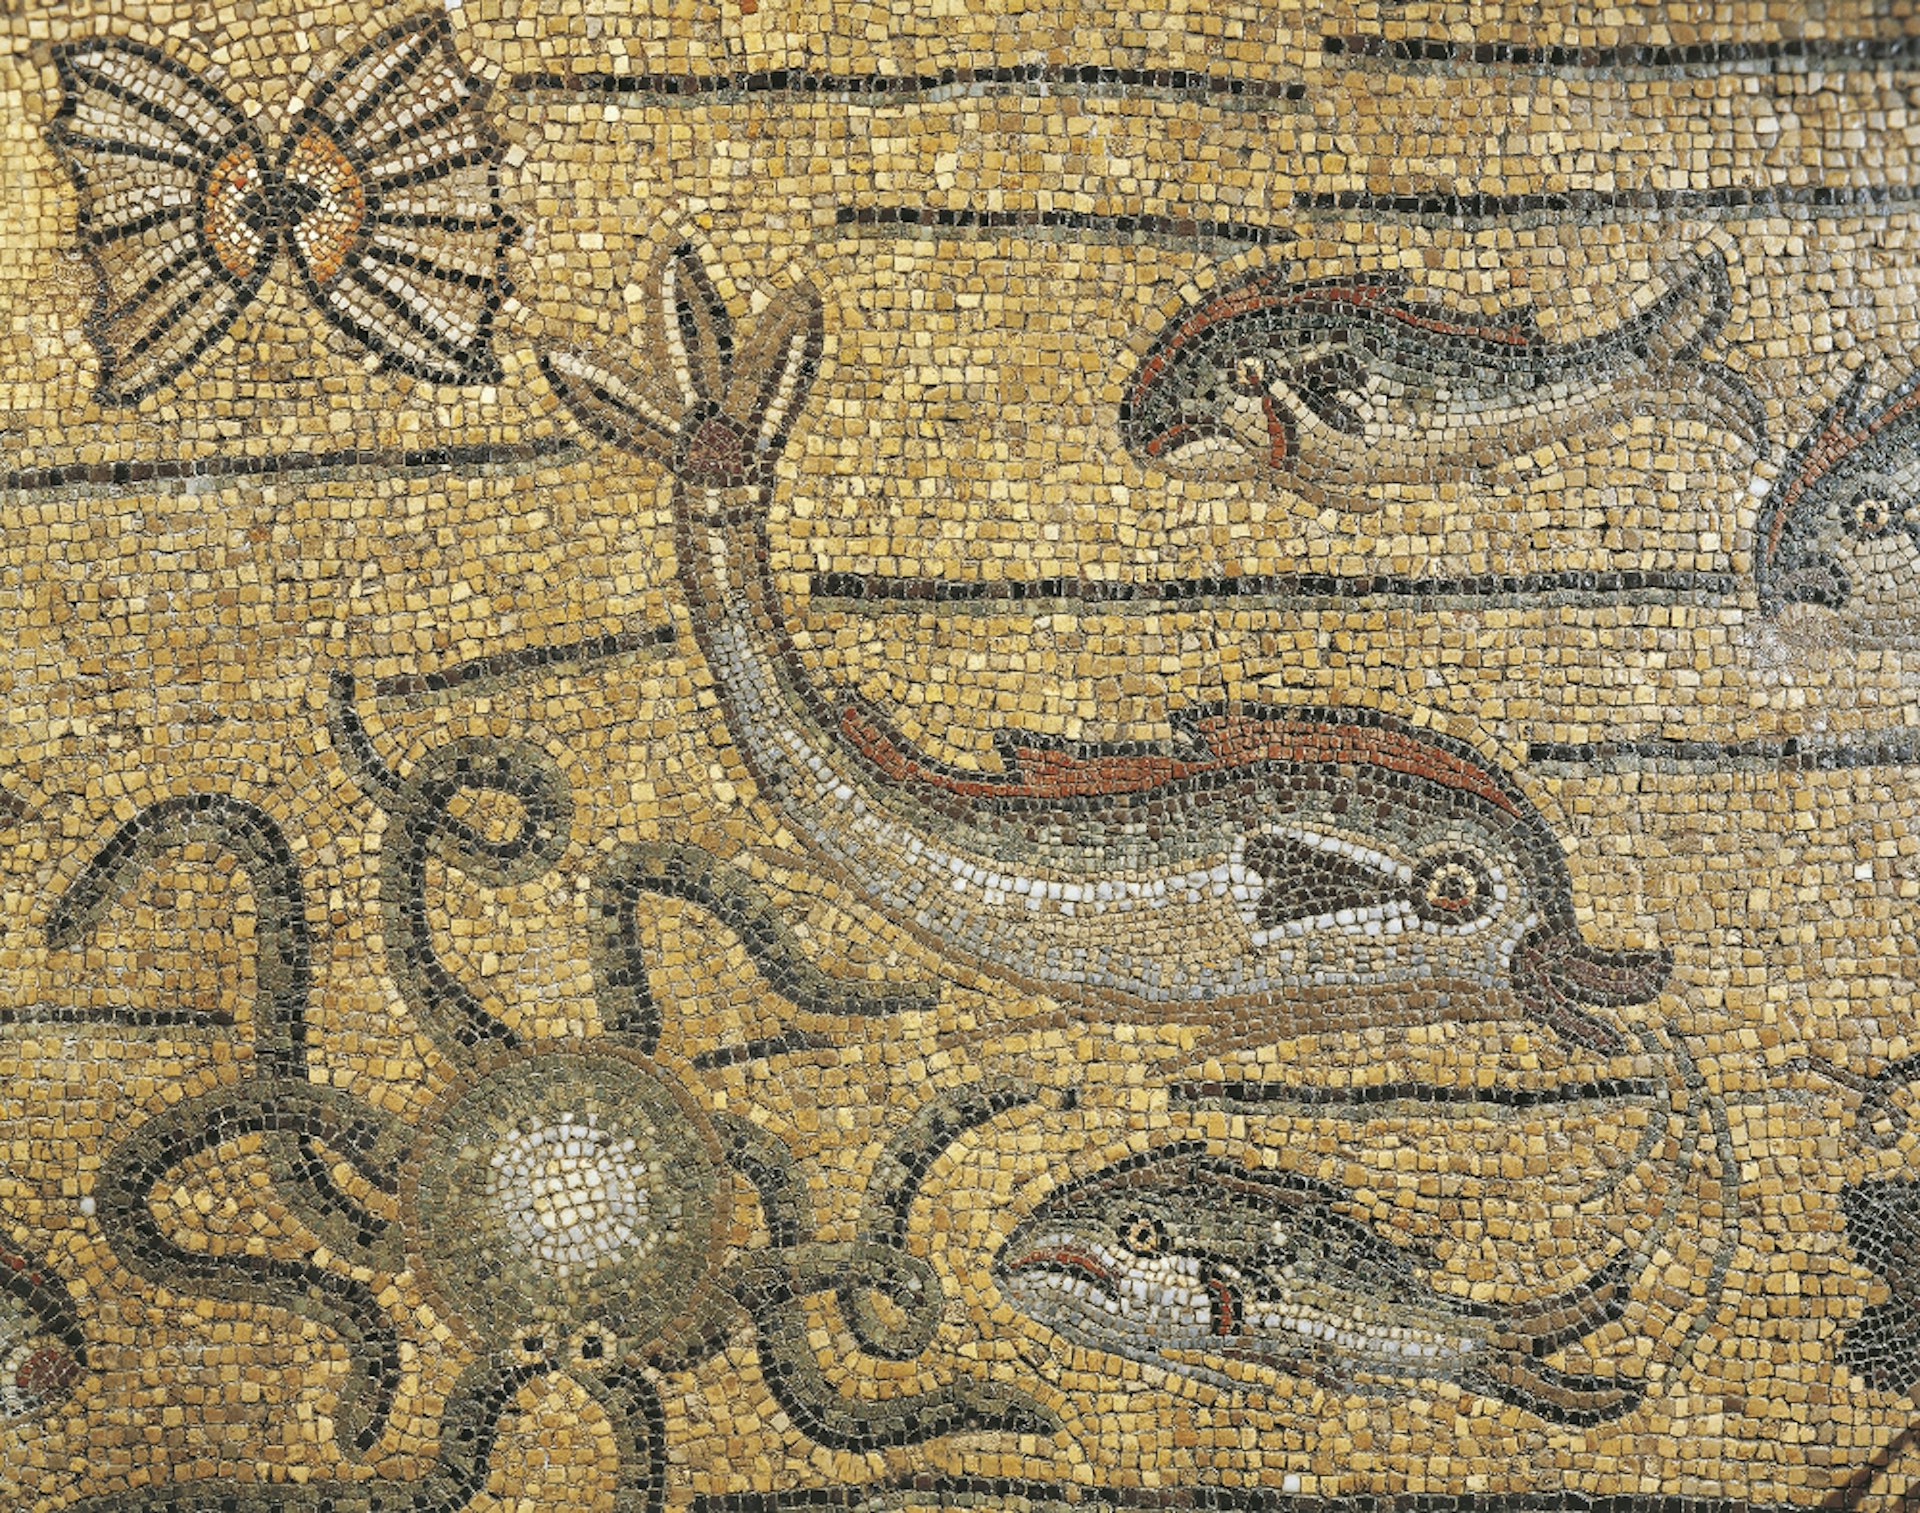 Roman mosaic showing lagoon sea creatures at Aquileia. 